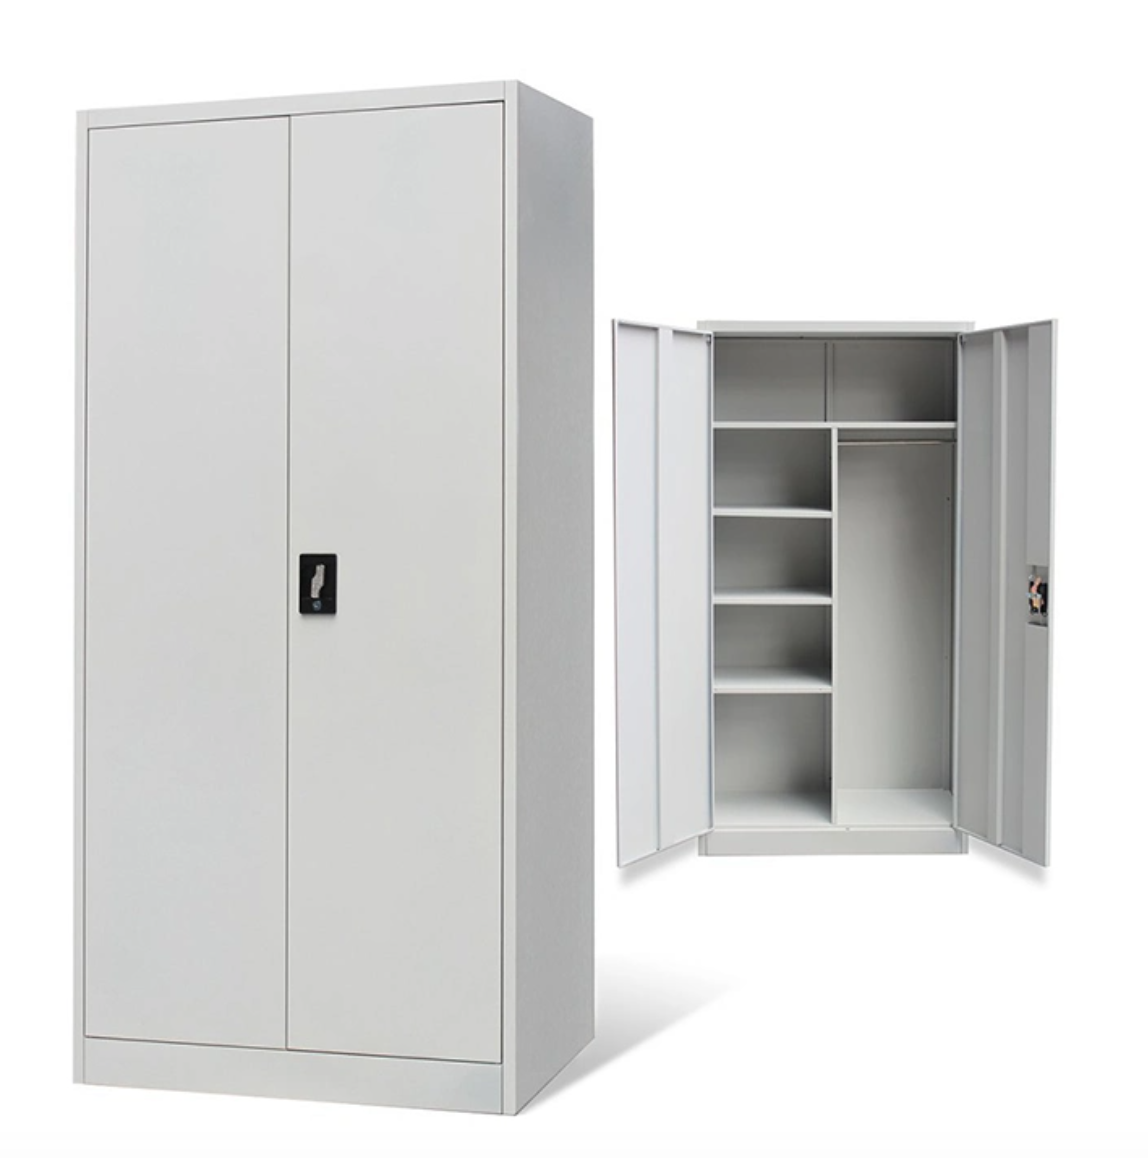 Custom Hospital Doctor′s Office Cabinet Stainless Steel 2 Door Clothes Almirah Lockers Wardrobe with Locker